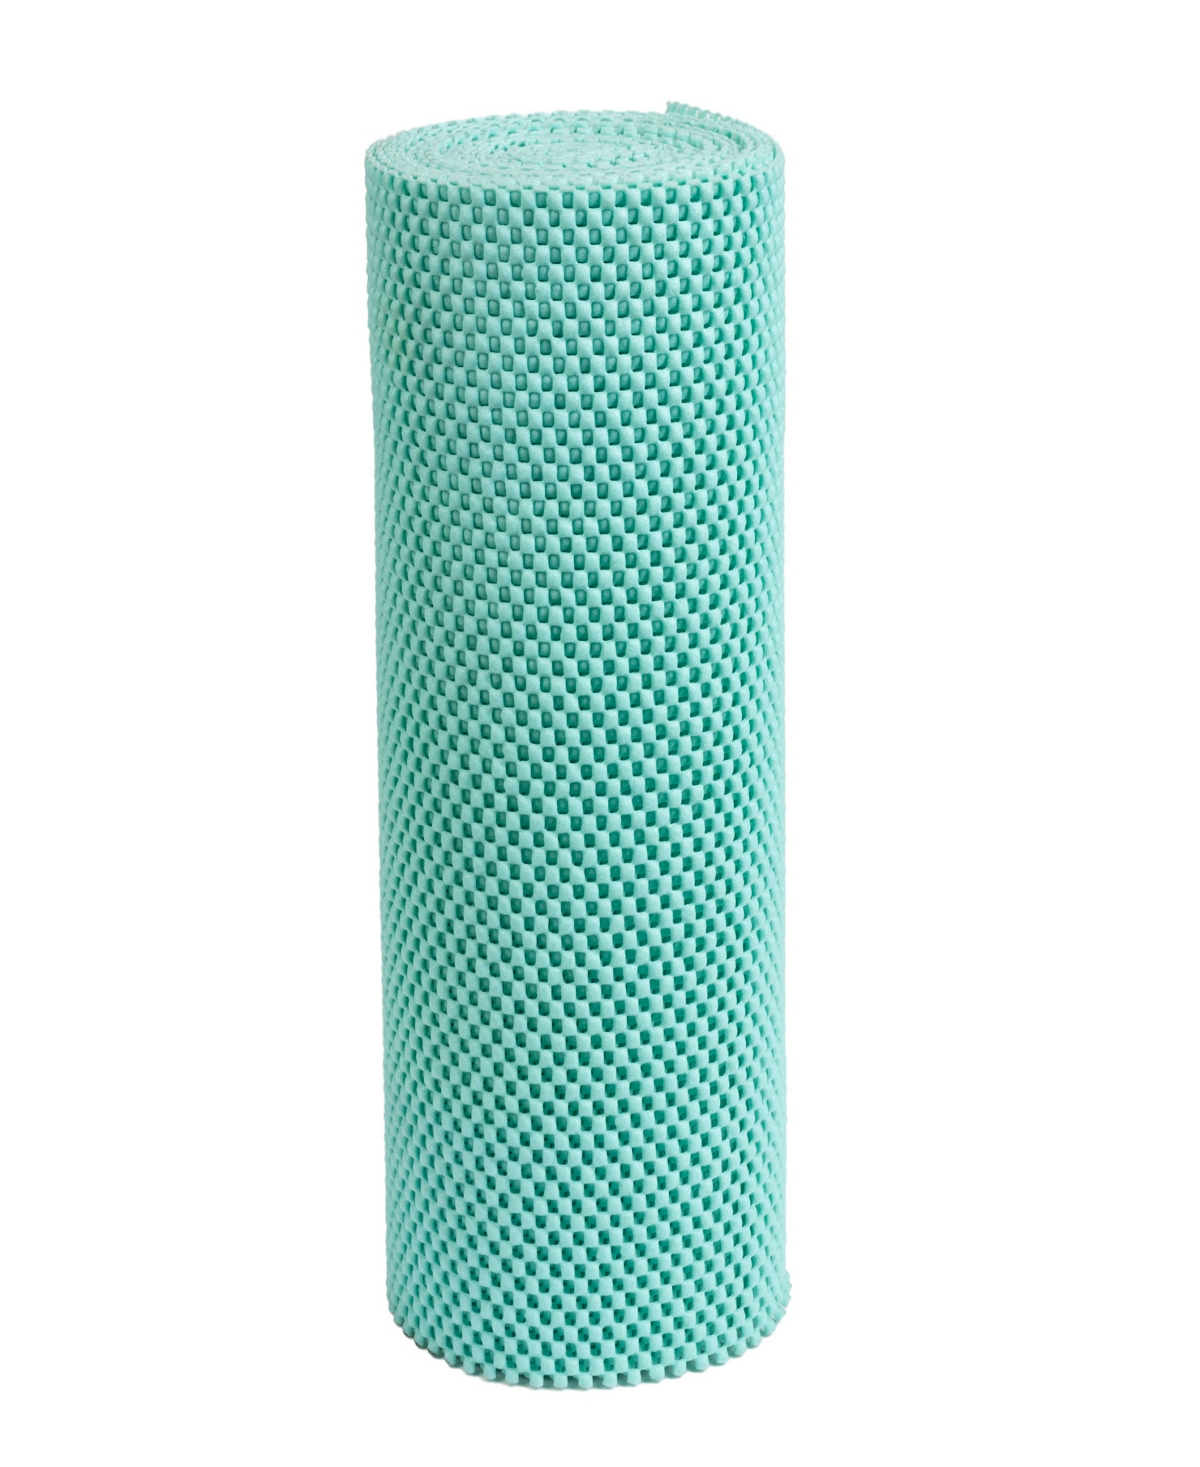 Smart Design Premium Grip Shelf Liner, 12" X 20' Roll In Mint